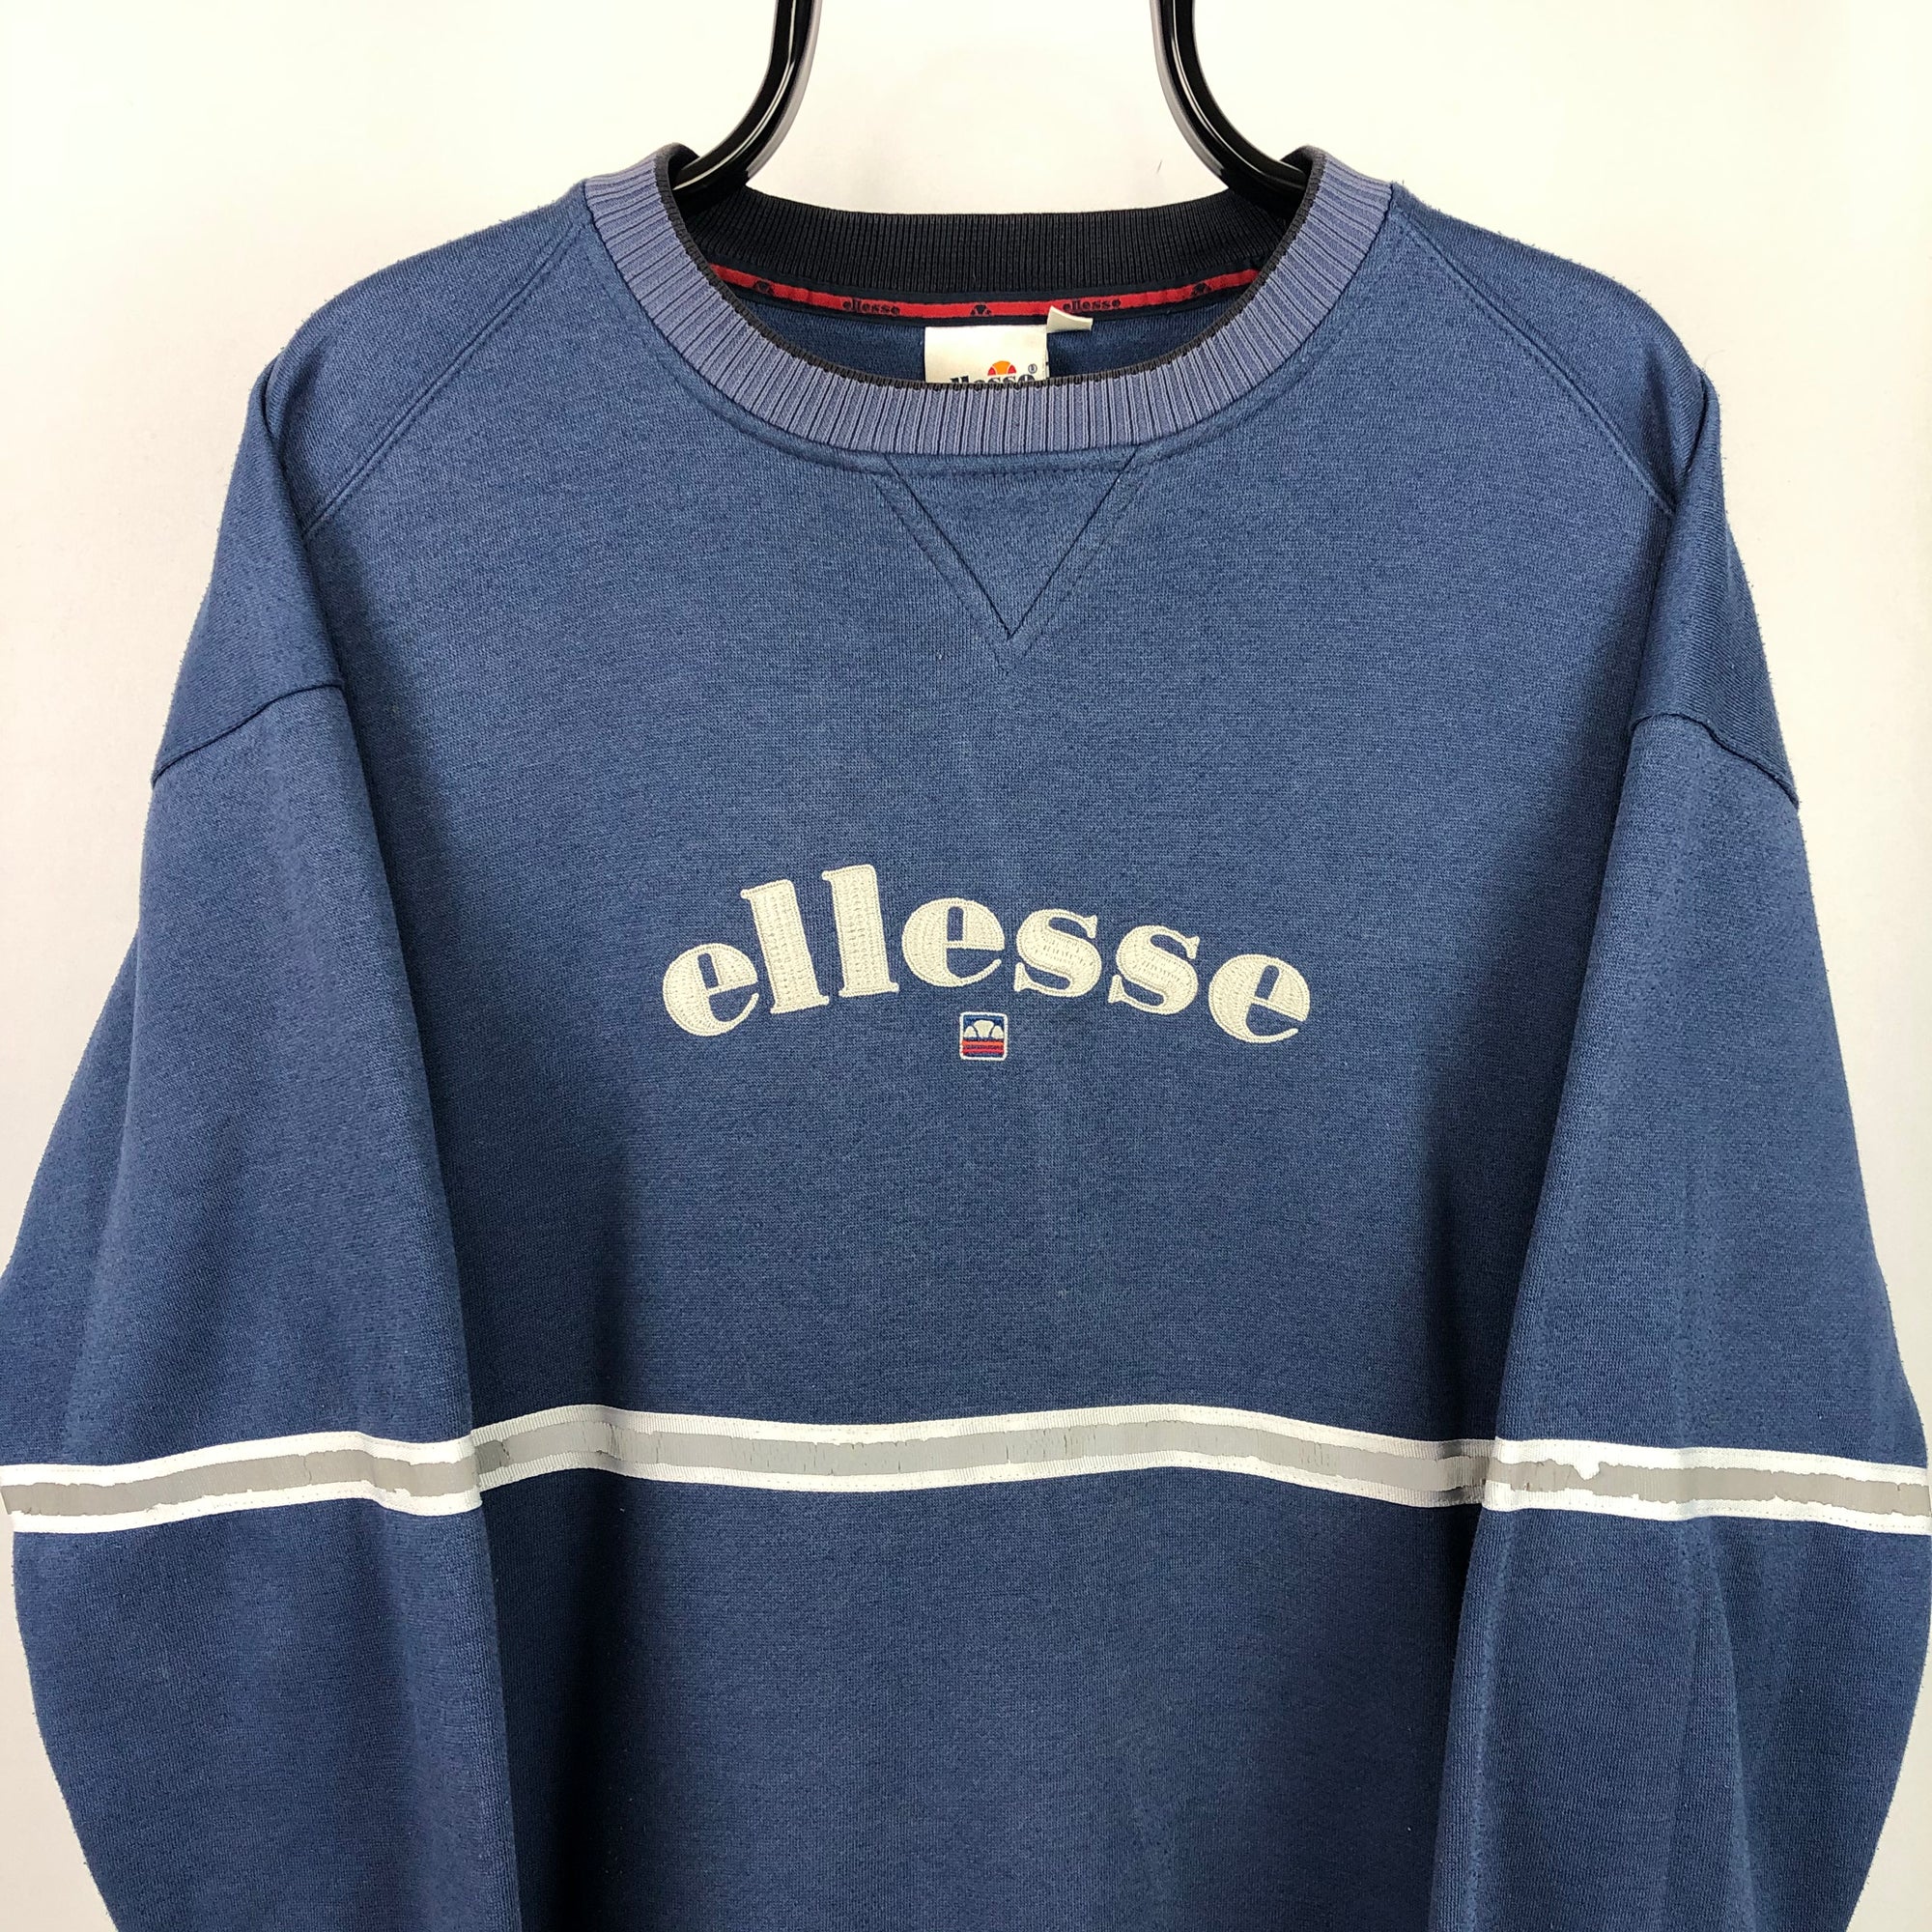 Vintage 90s Ellesse Spellout Sweatshirt in Navy - Men's Large/Women's XL